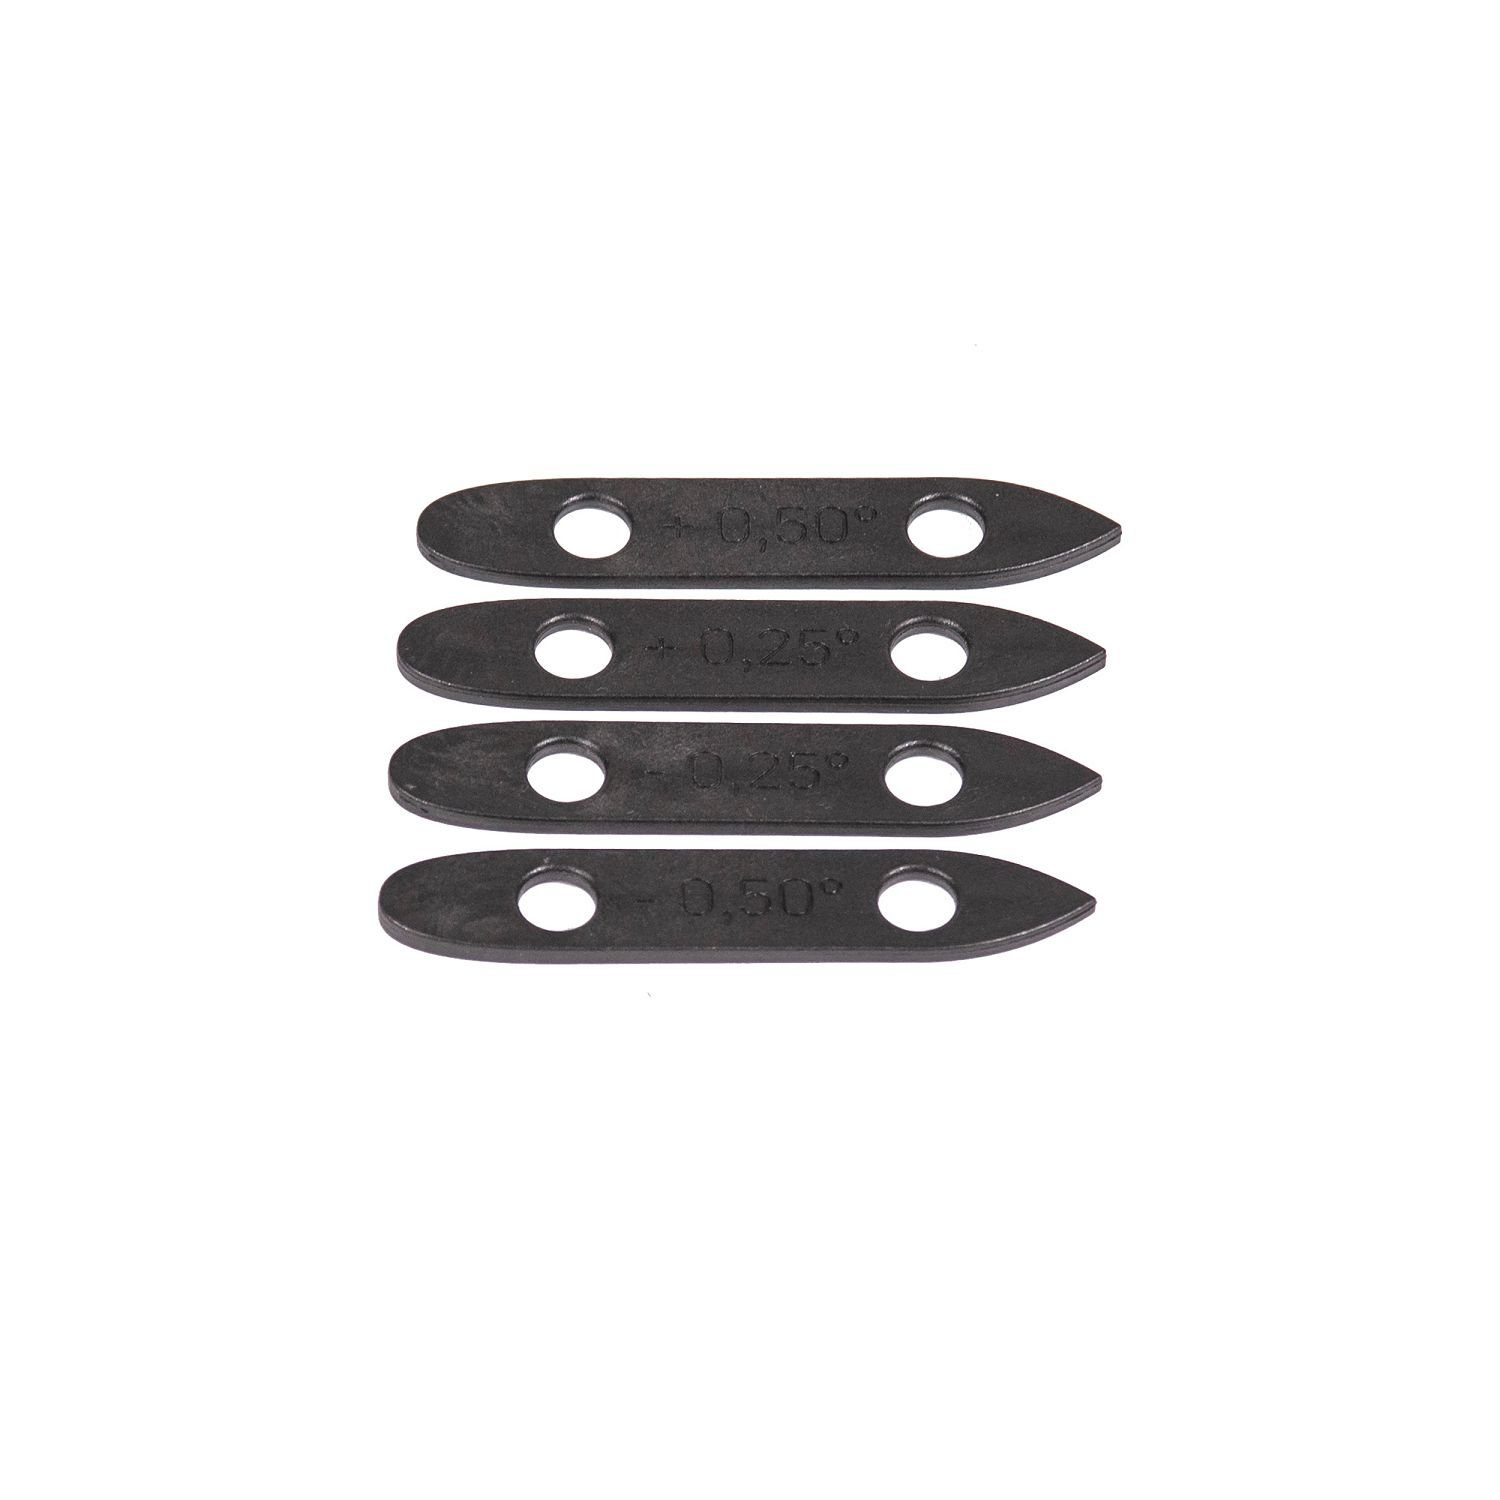 Fanatic SUP-Board Fanatic black Wedge Parts Foil Foil Set (4pcs)